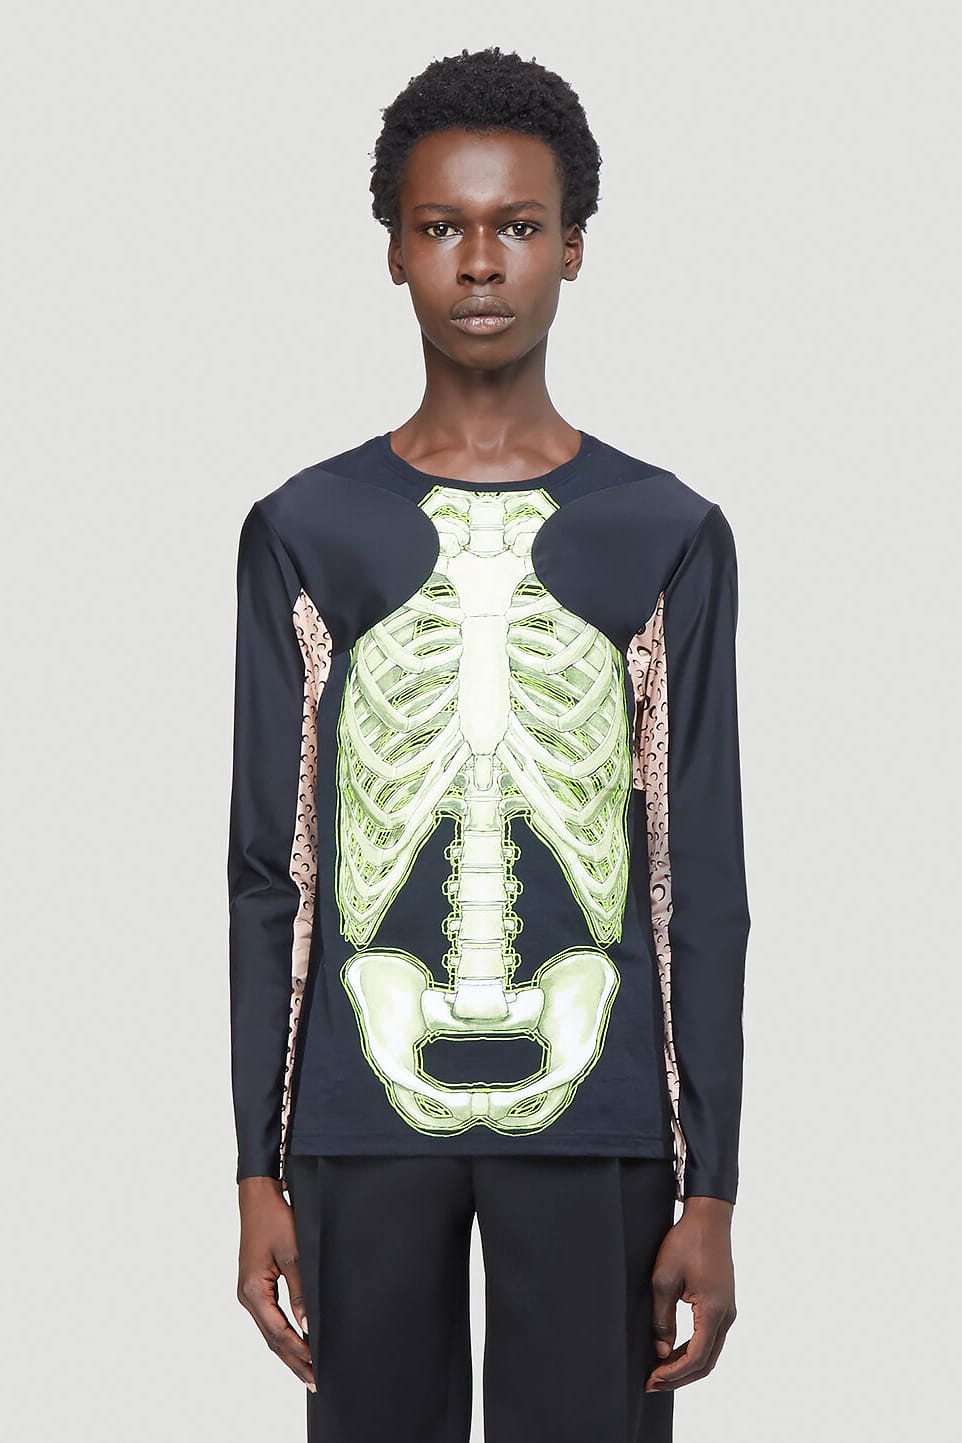 Women Skeleton Shirt Long Sleeve Costume Tops Halloween Skeleton Sweatshirt L